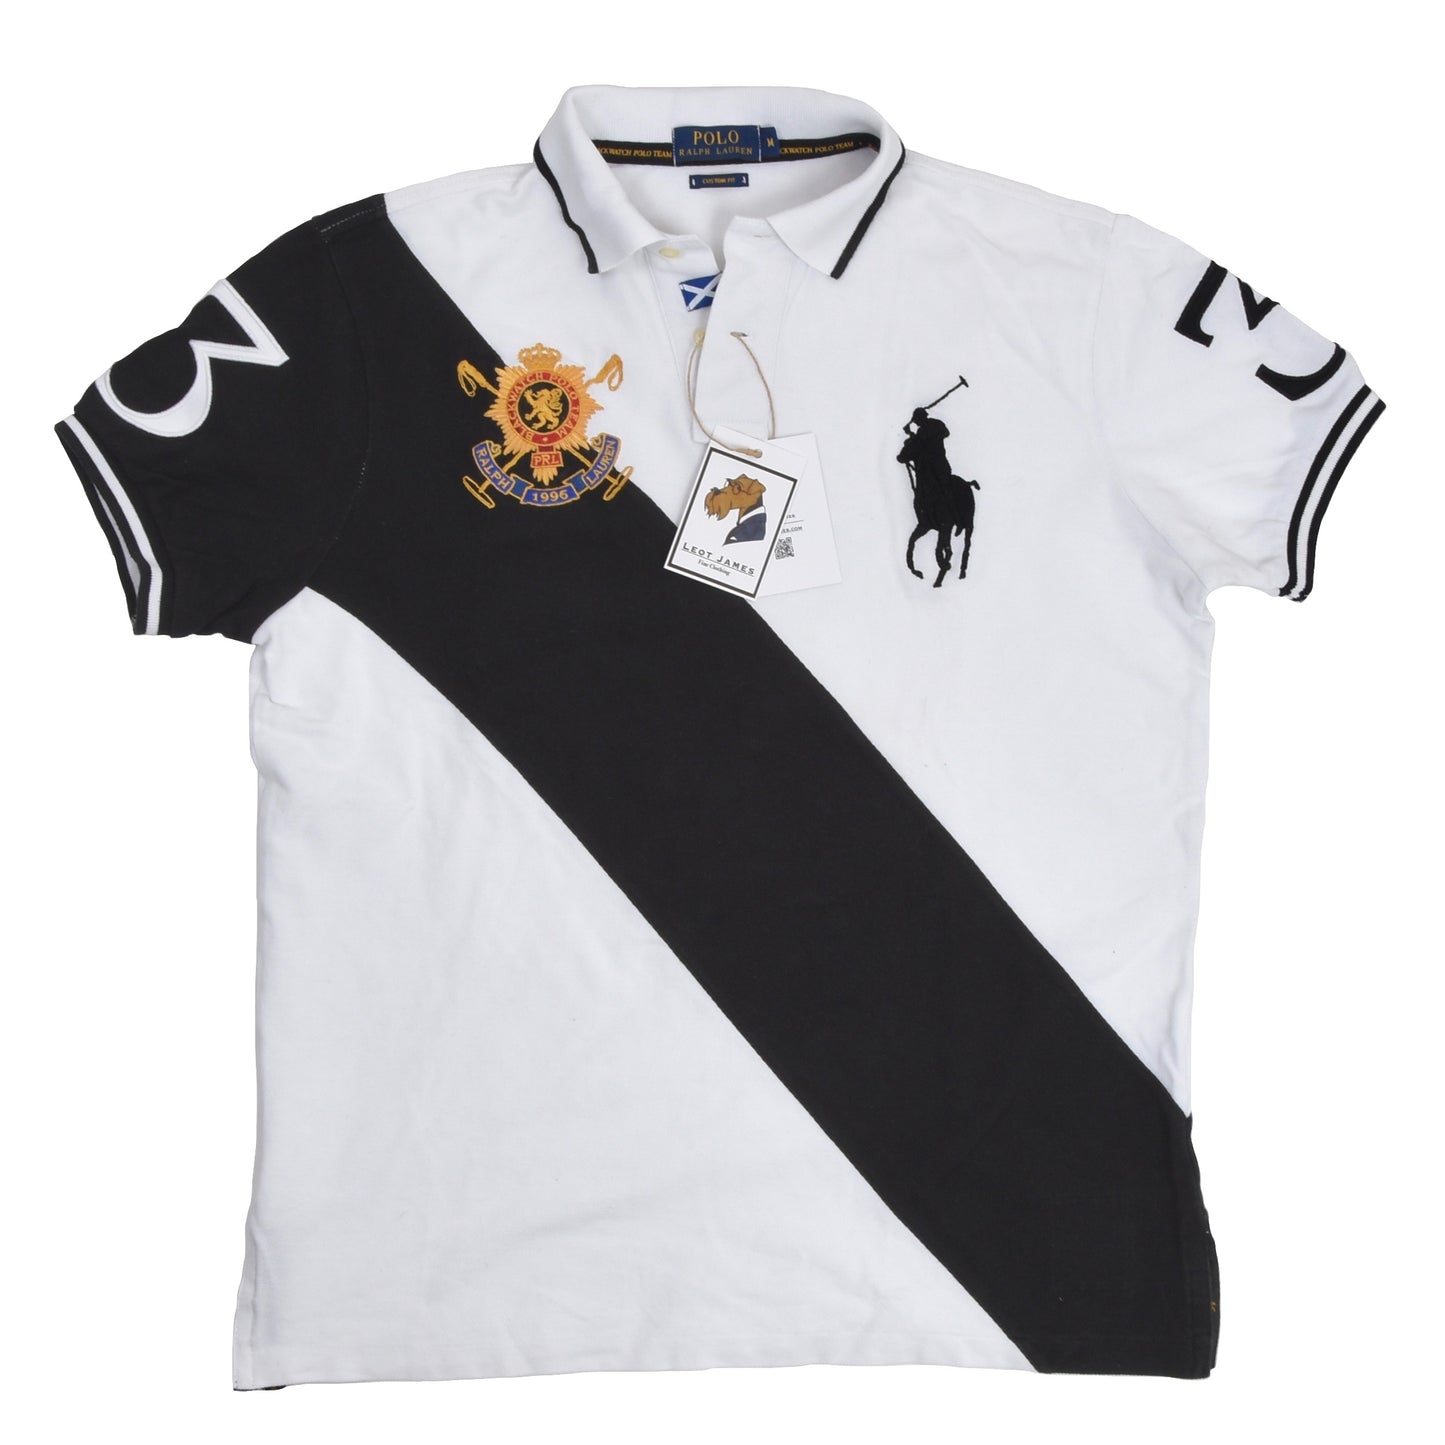 Polo Ralph Lauren Custom Fit Poloshirt Größe M - Schwarz/Weiß